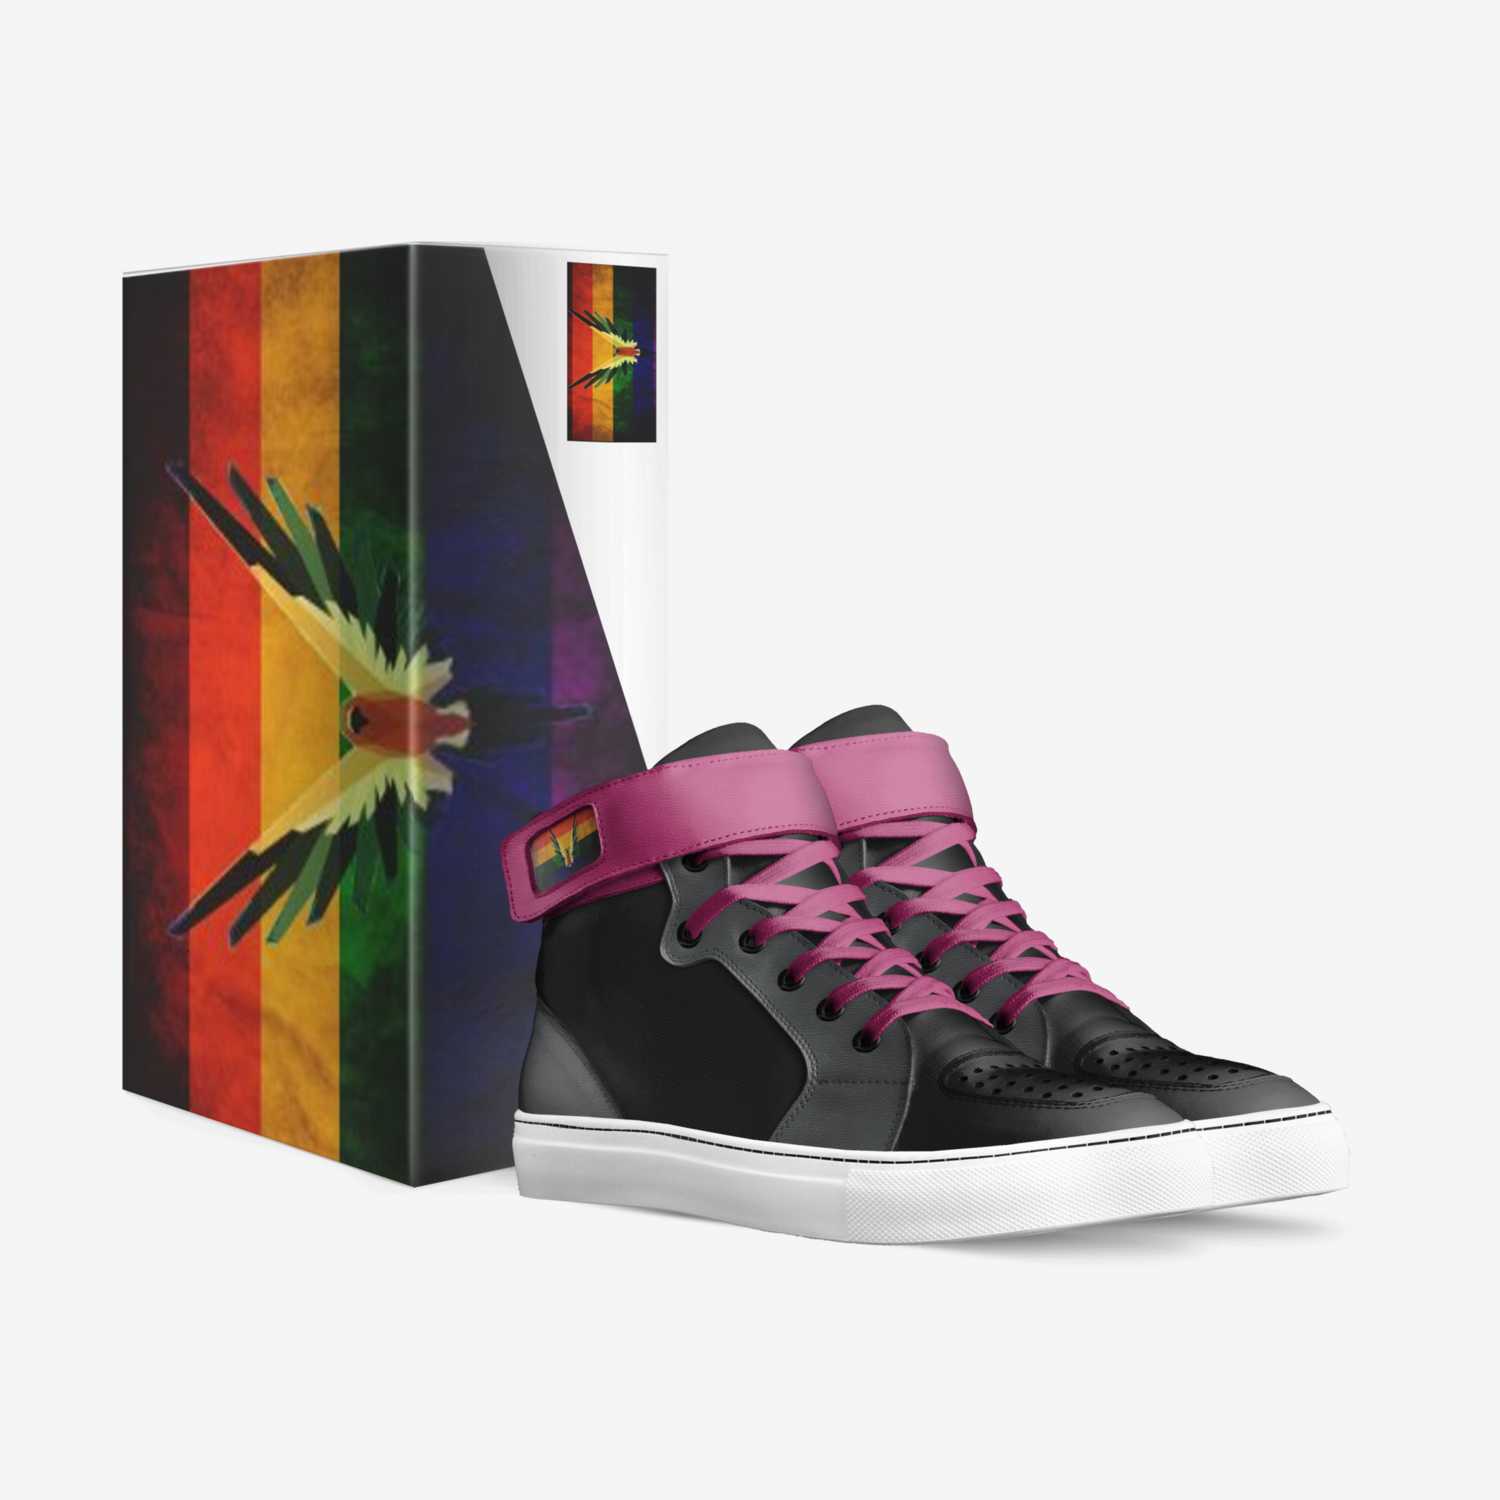 Maverick custom made in Italy shoes by Morgan | Box view